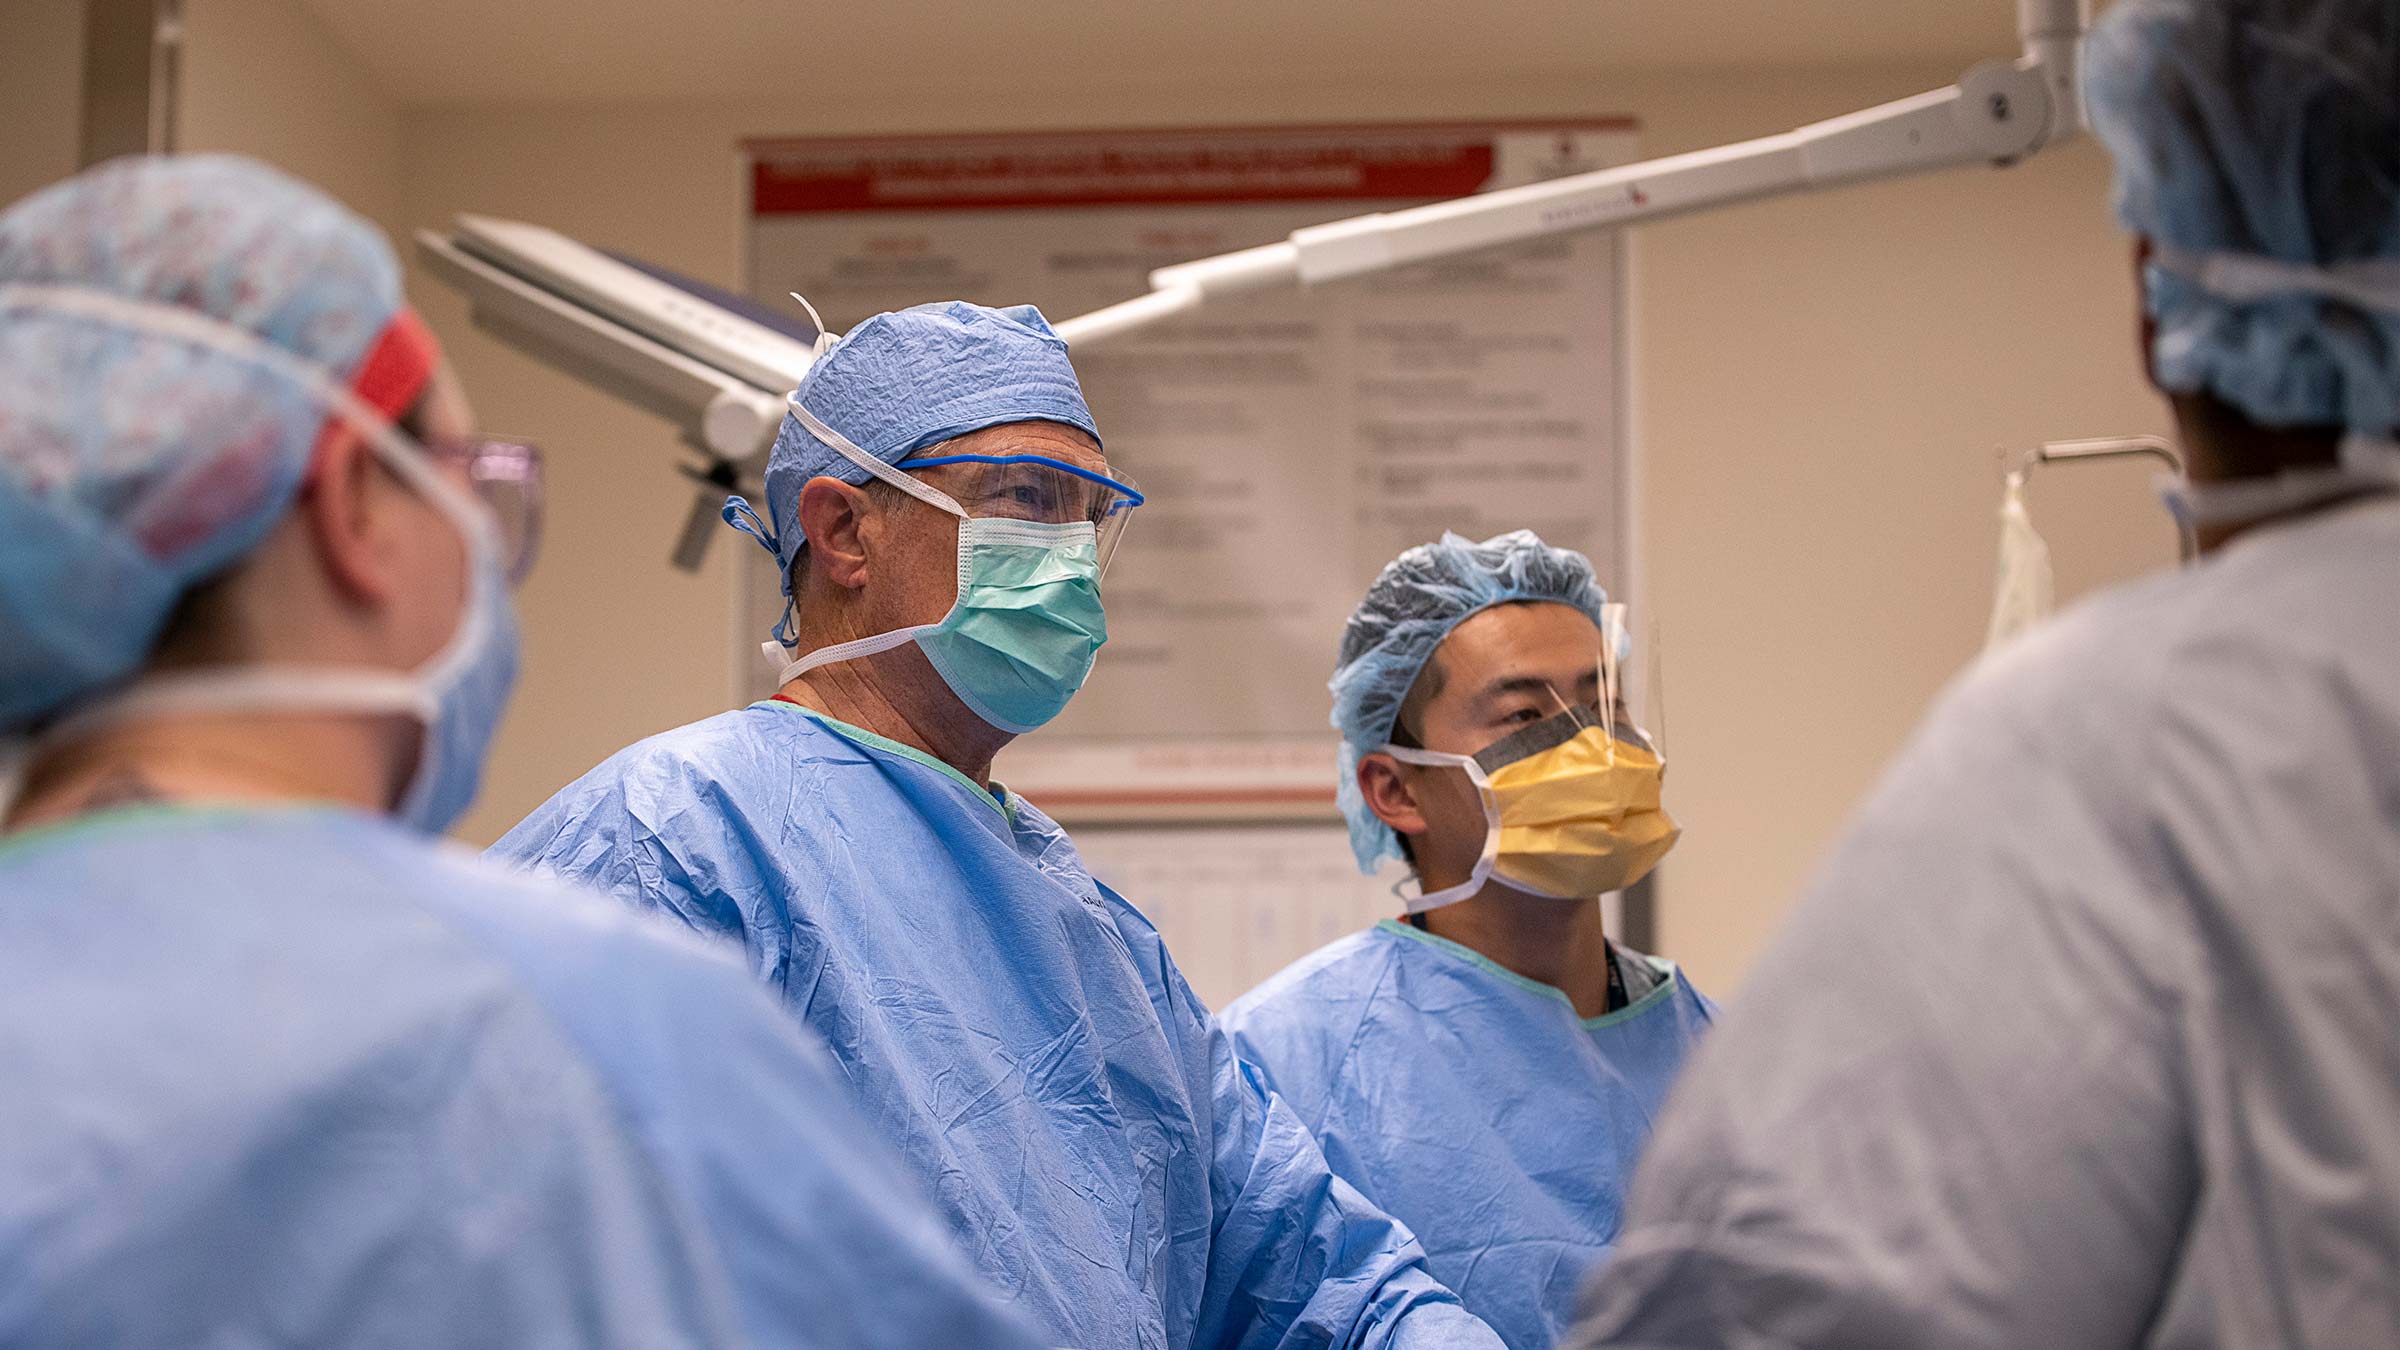 Dr. Kaeding performing surgery